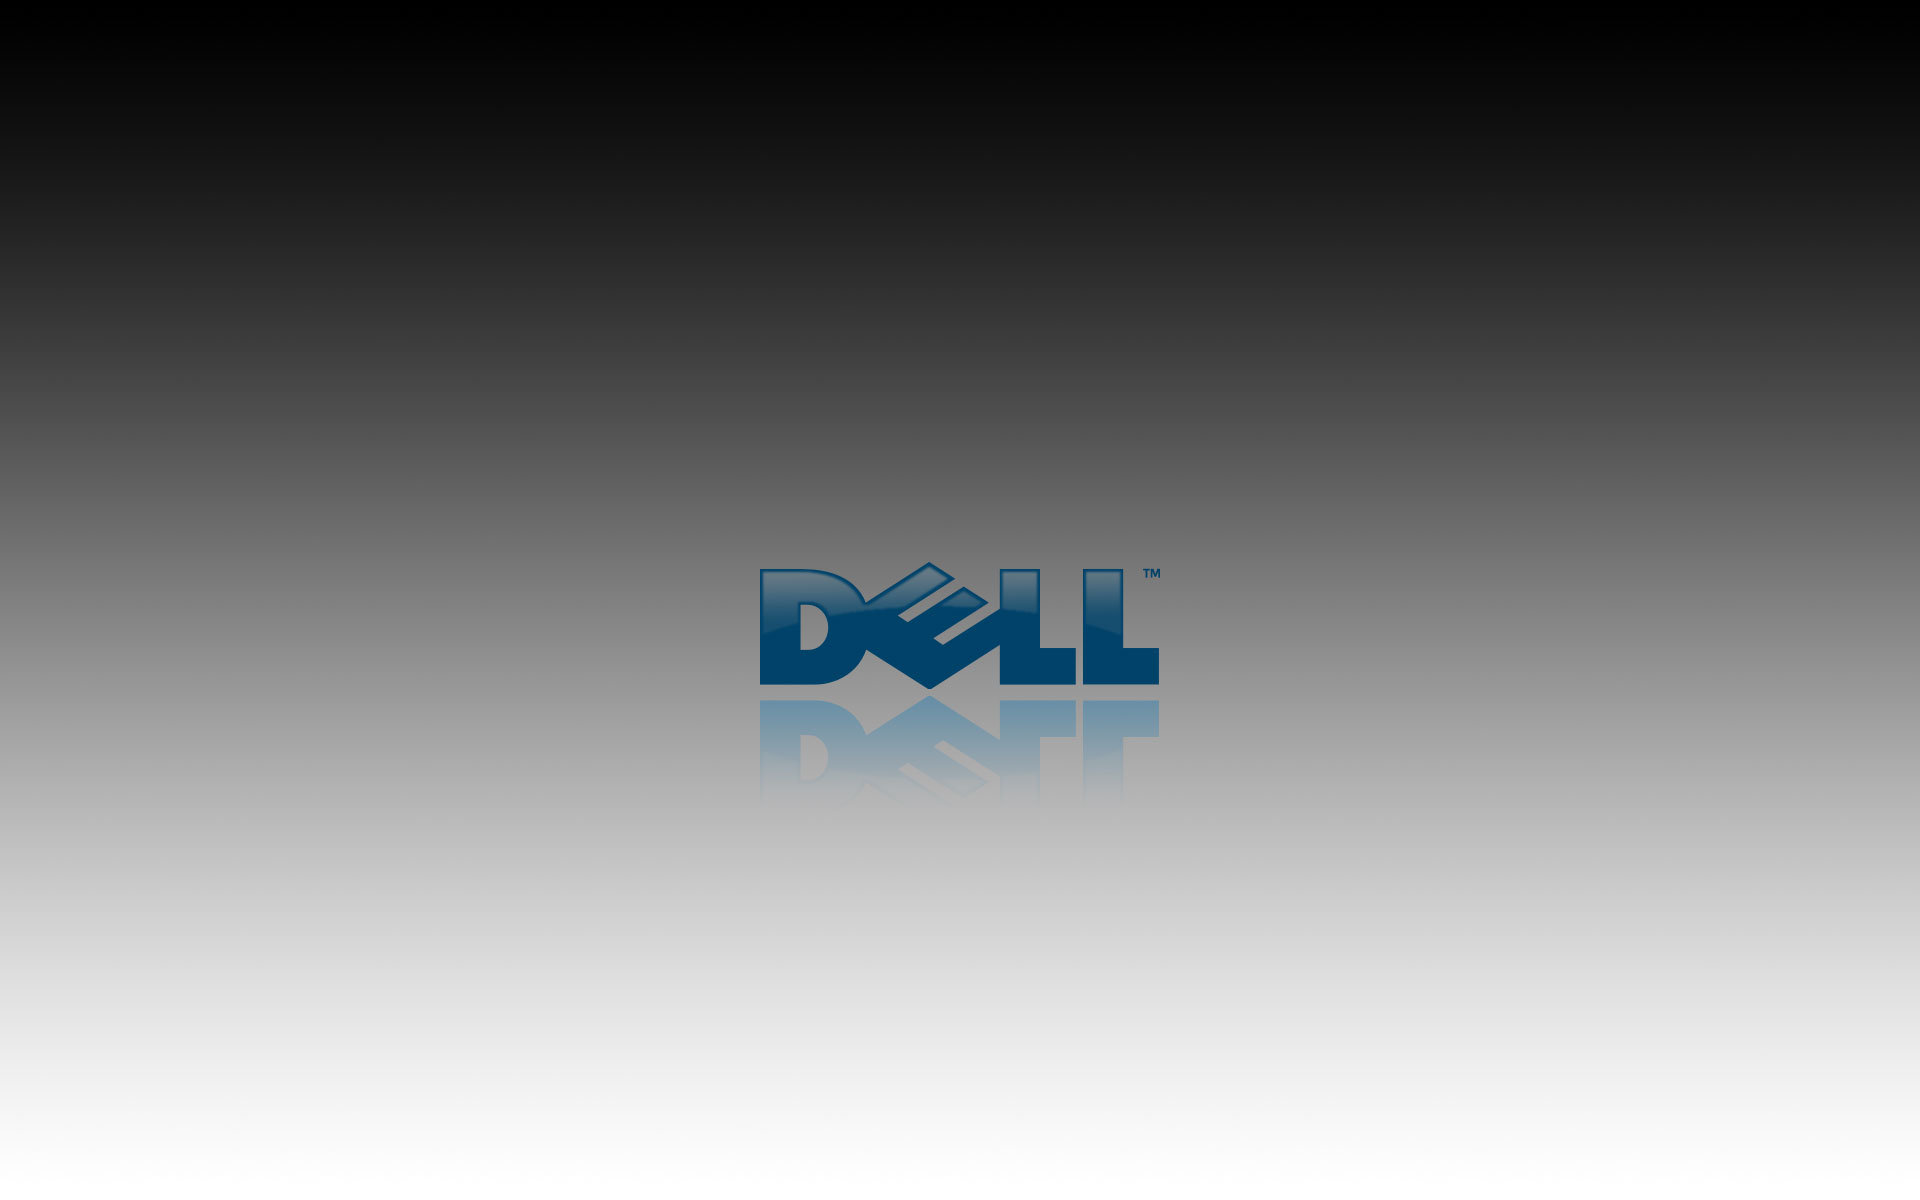 Dell Wallpaper Widescreen In HD